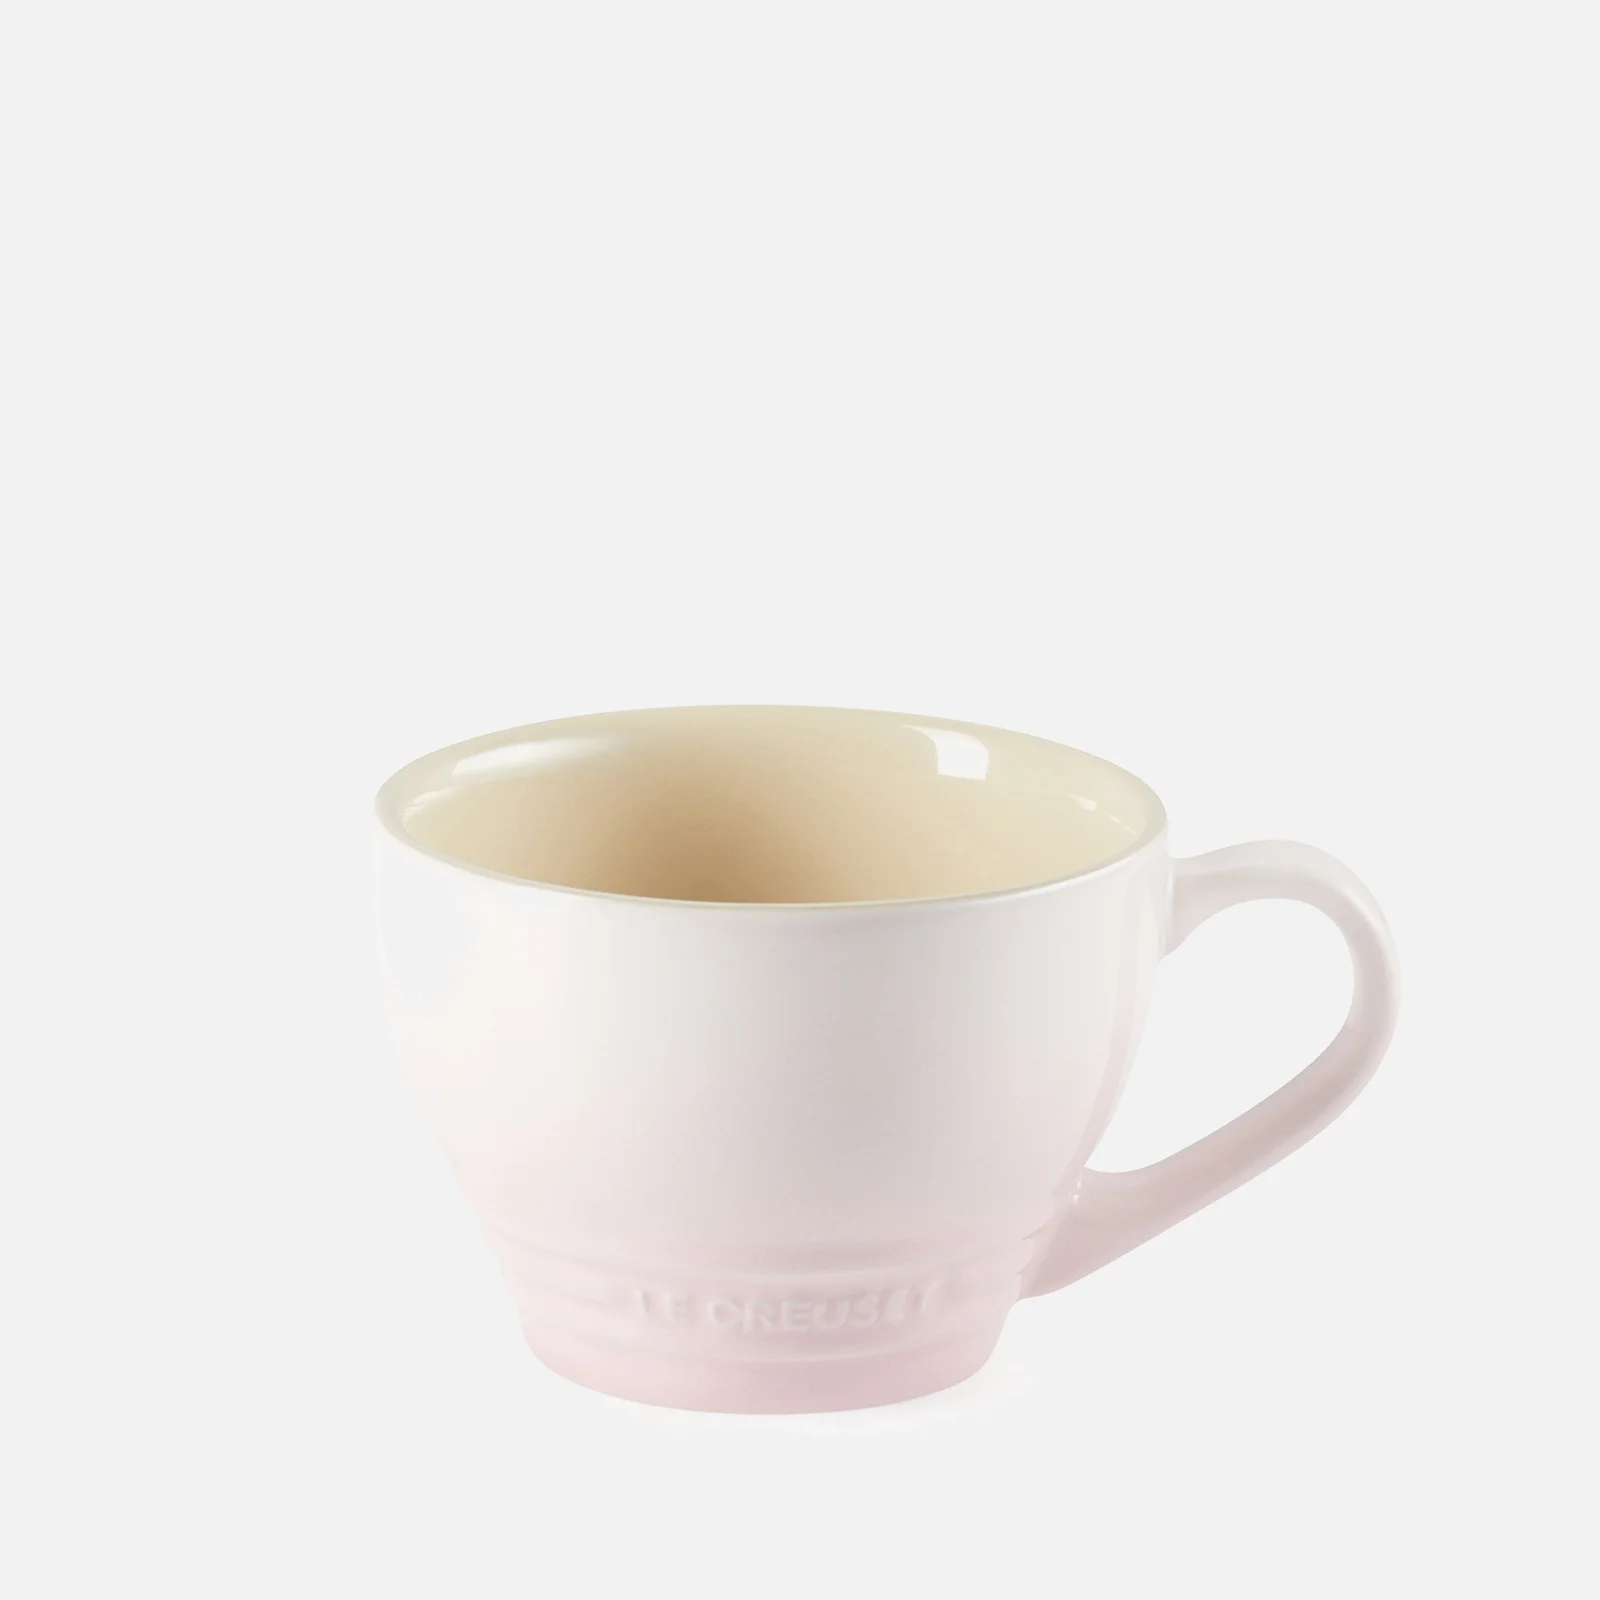 Le Creuset Stoneware Grand Mug - 400ml - Shell Pink Image 1